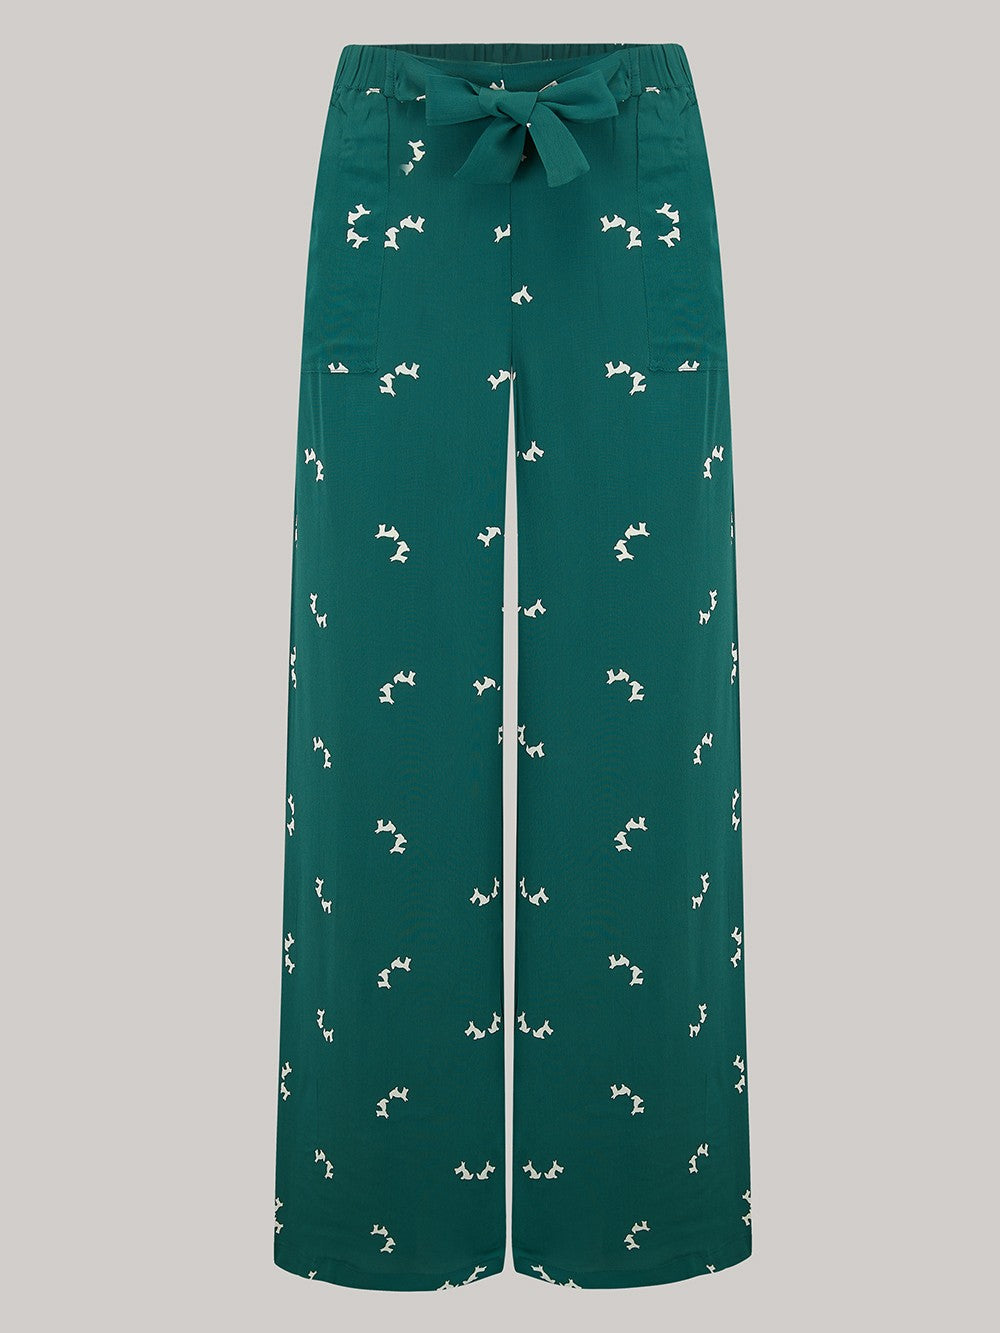 Gretta 1940s Trousers in Green Doggy